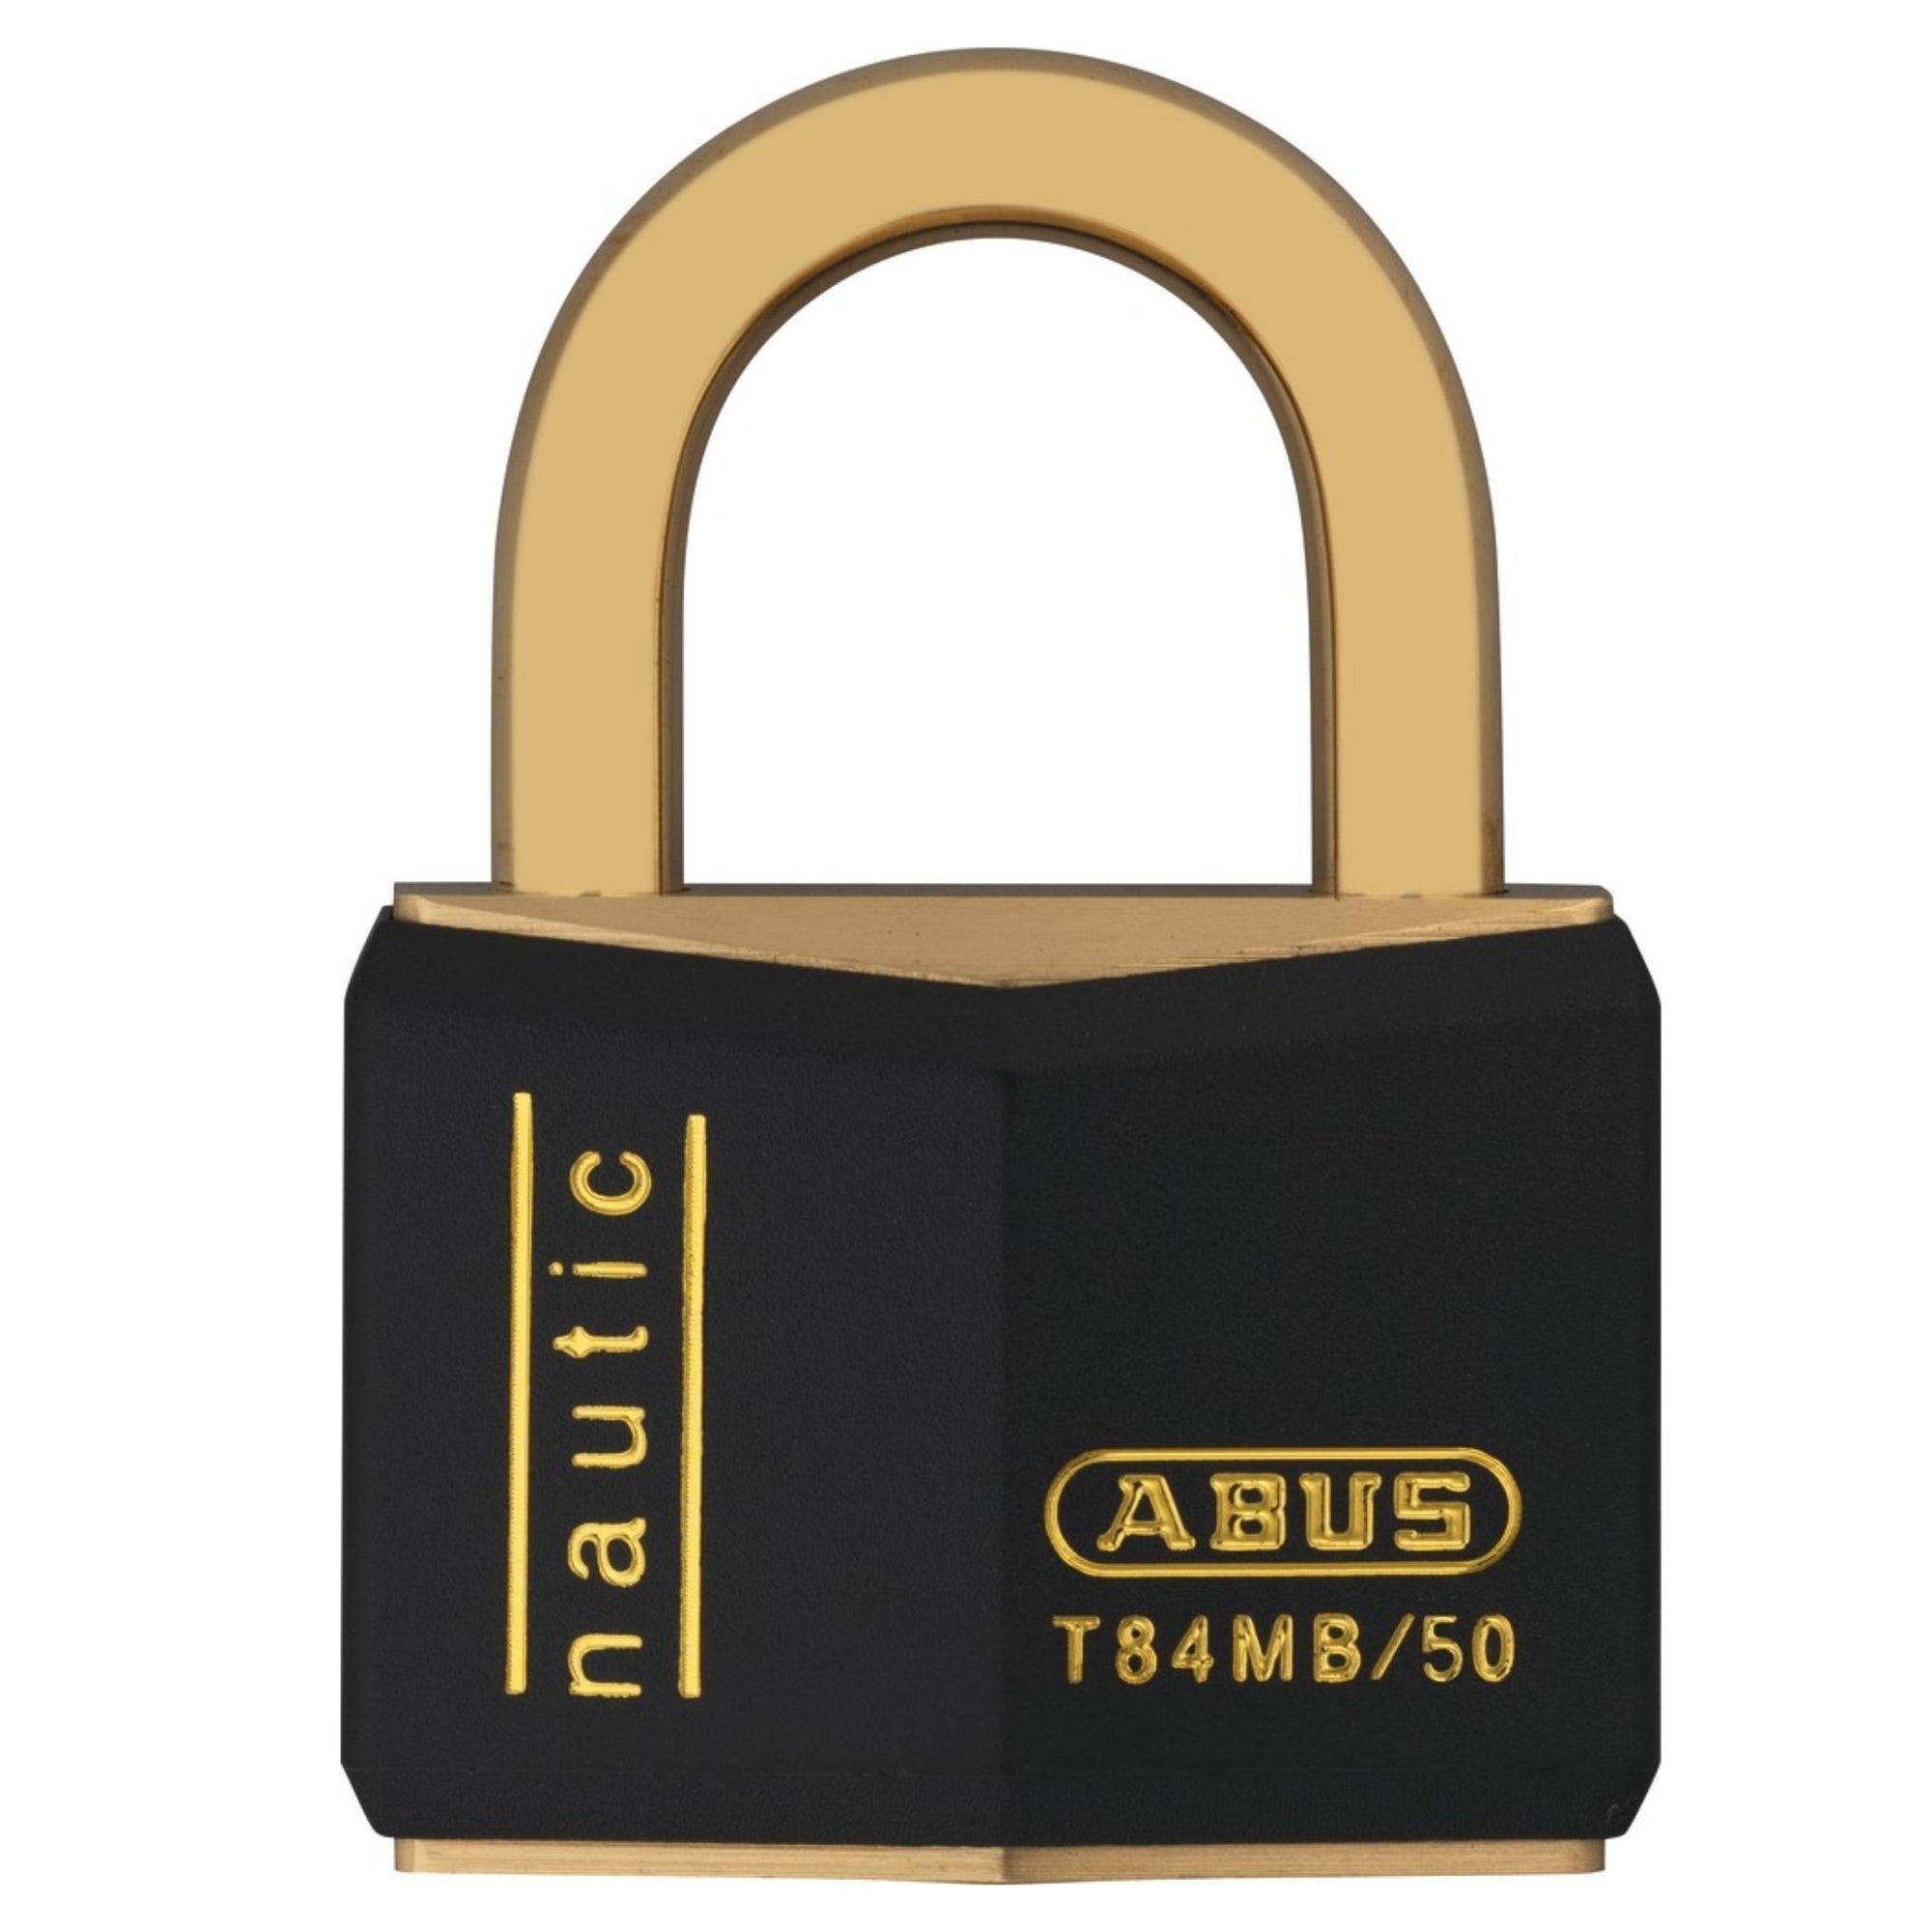 Abus T84MB/50 KA 8502 Weatherproof Brass Padlock Keyed Alike to Match Existing Key# KA8502 - The Lock Source